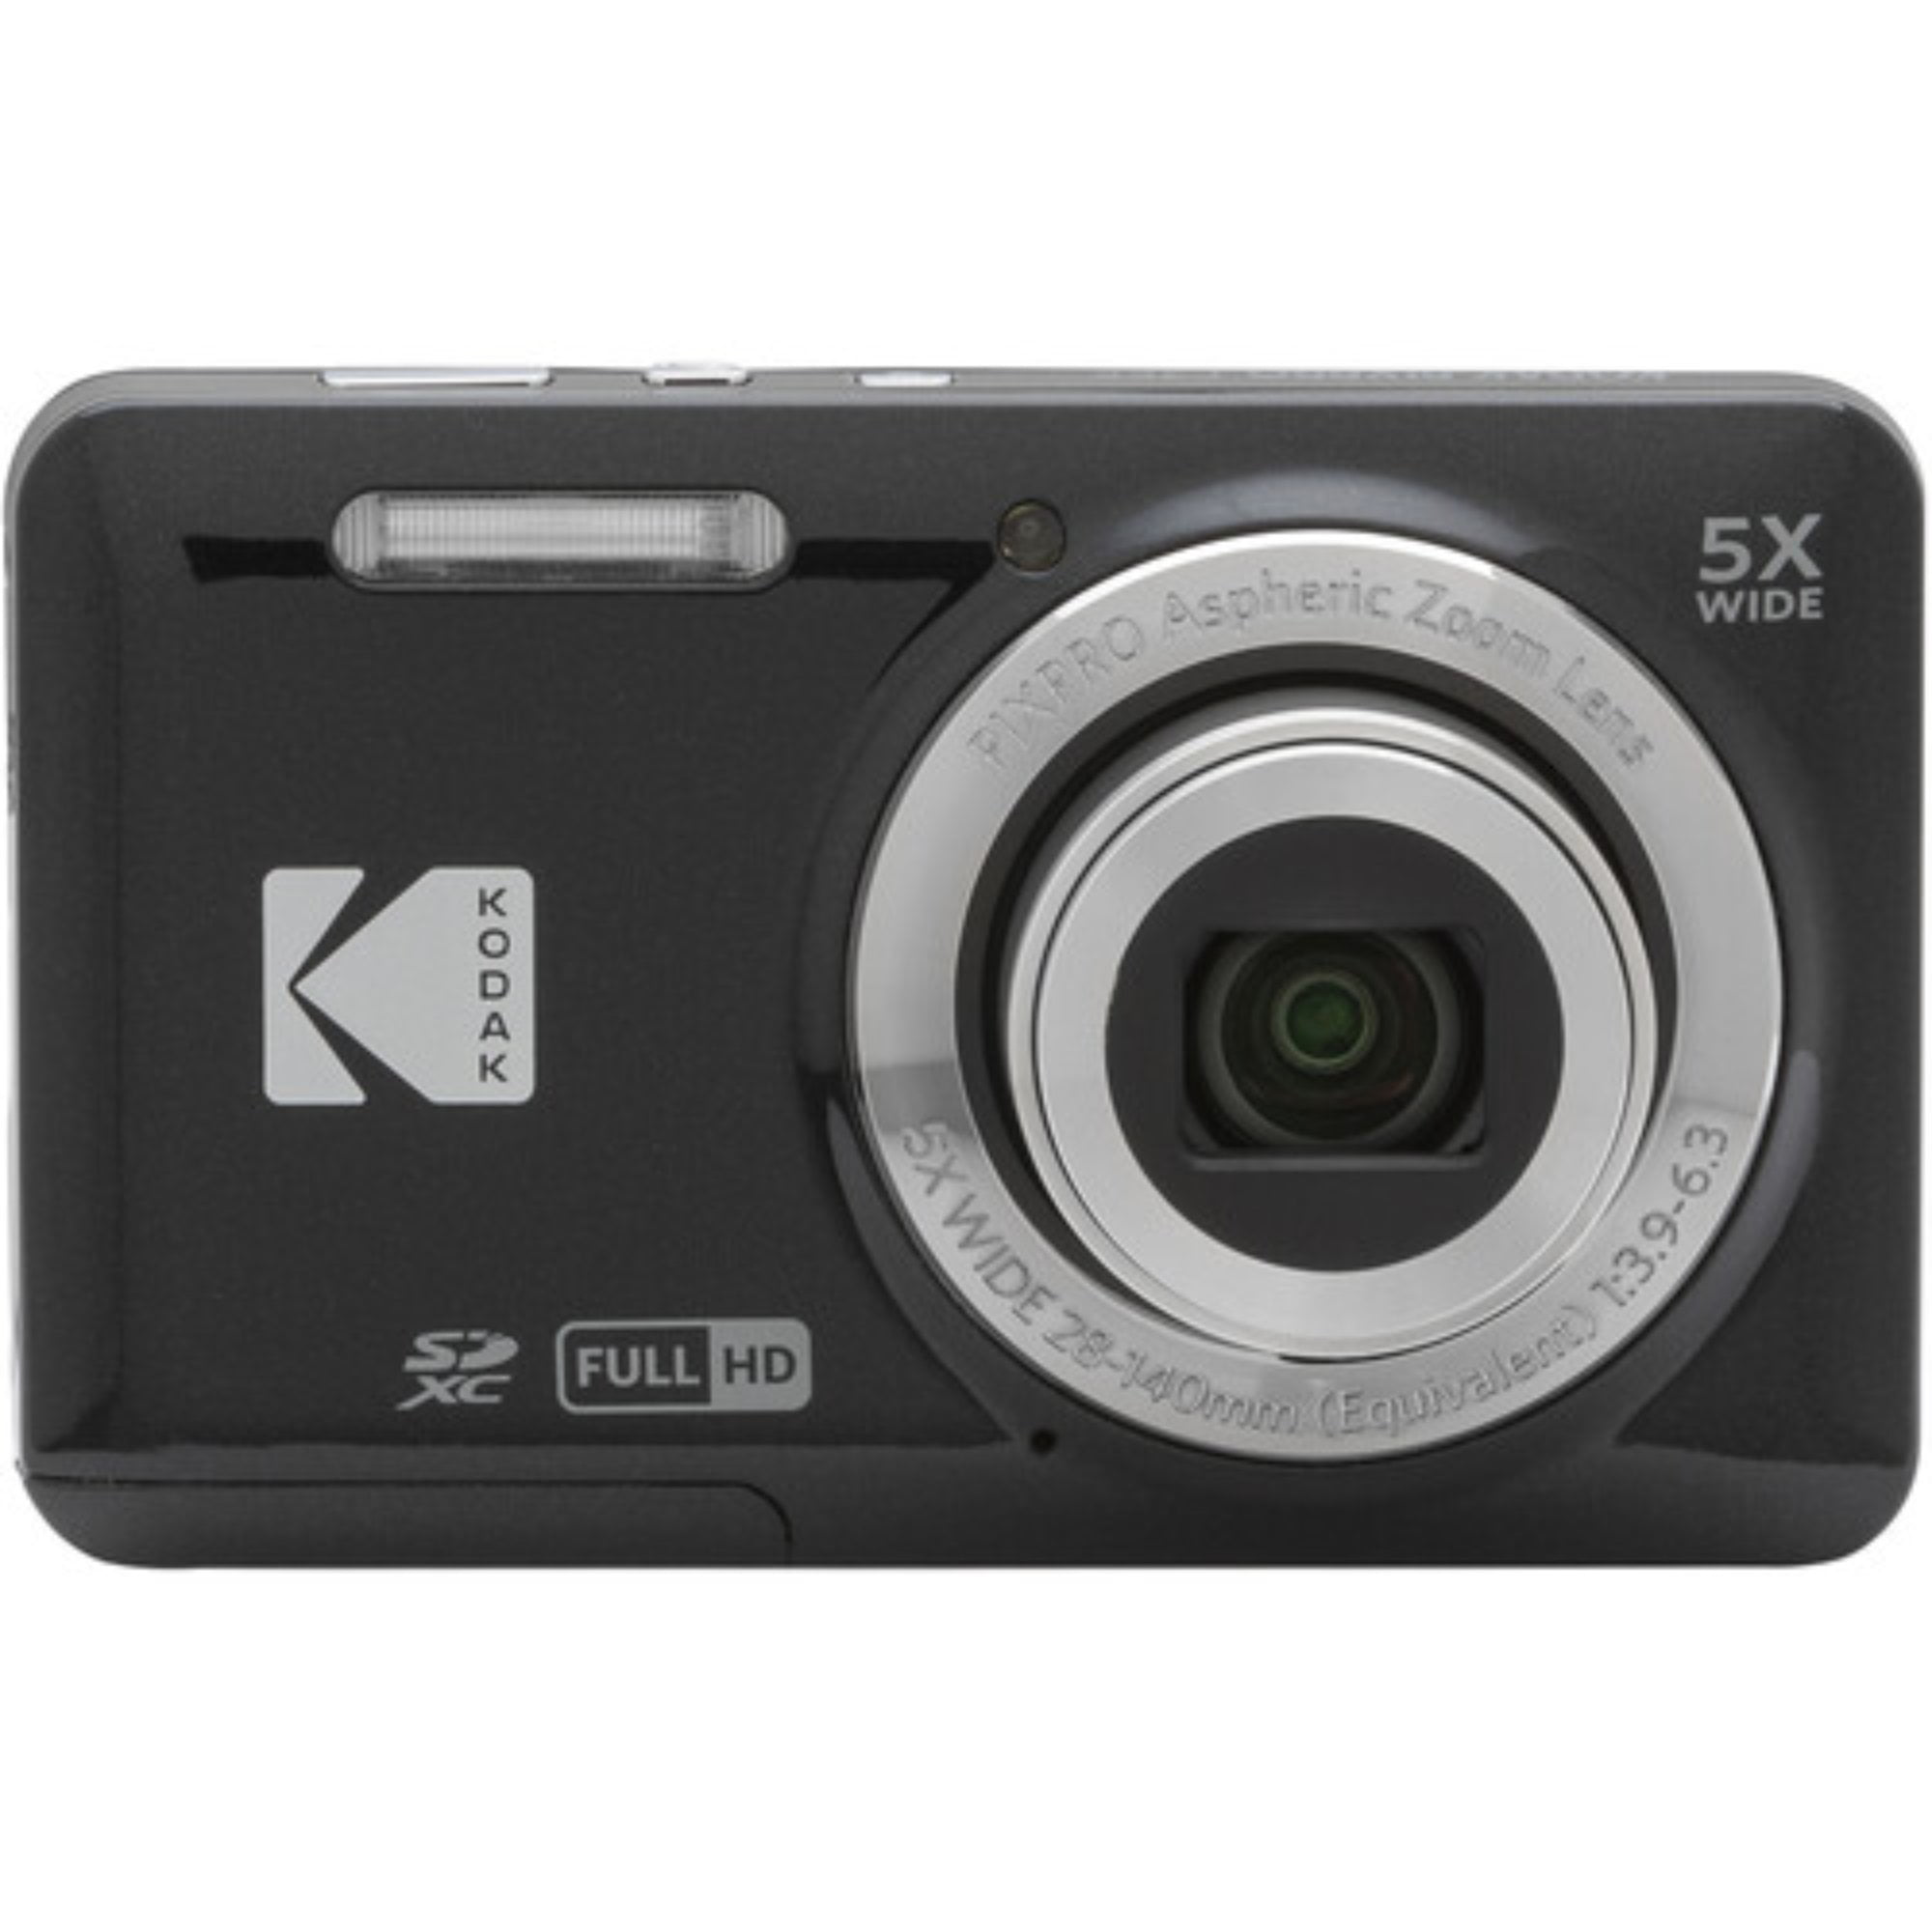 Kodak Pixpro Friendly Zoom Fz55 Digital Camera (Black)